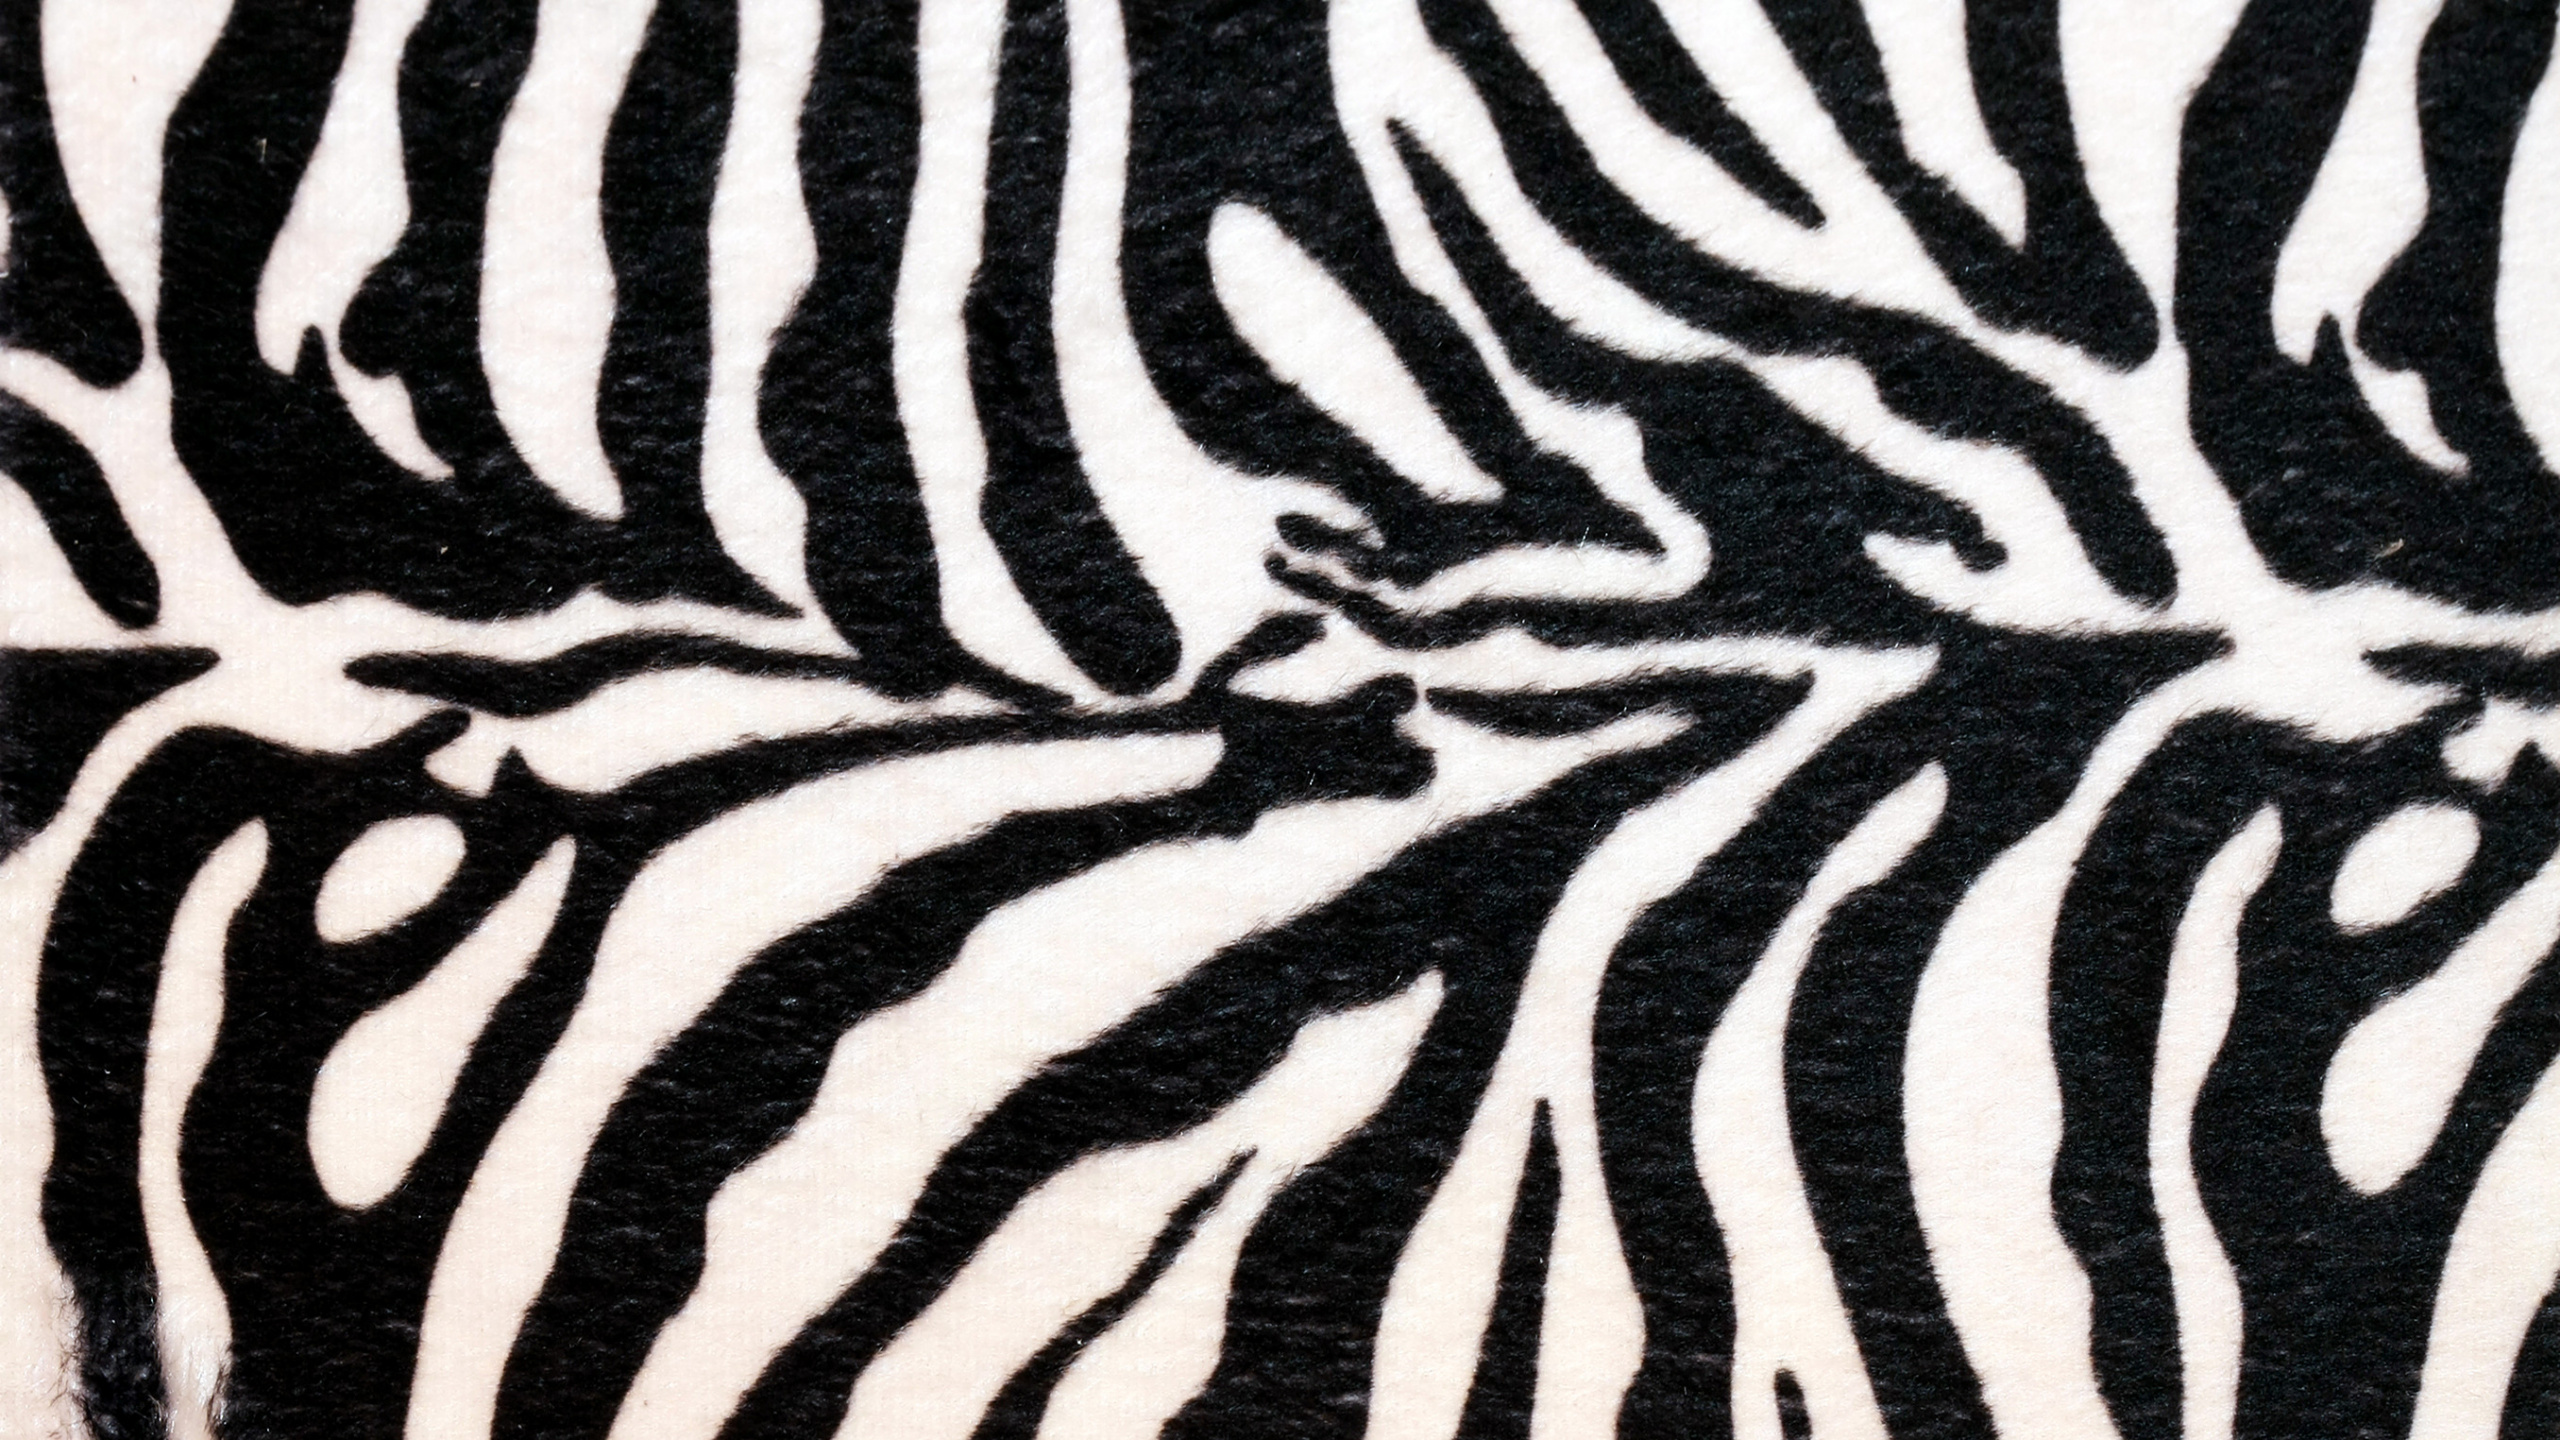 Textil Cebra Blanco y Negro. Wallpaper in 2560x1440 Resolution